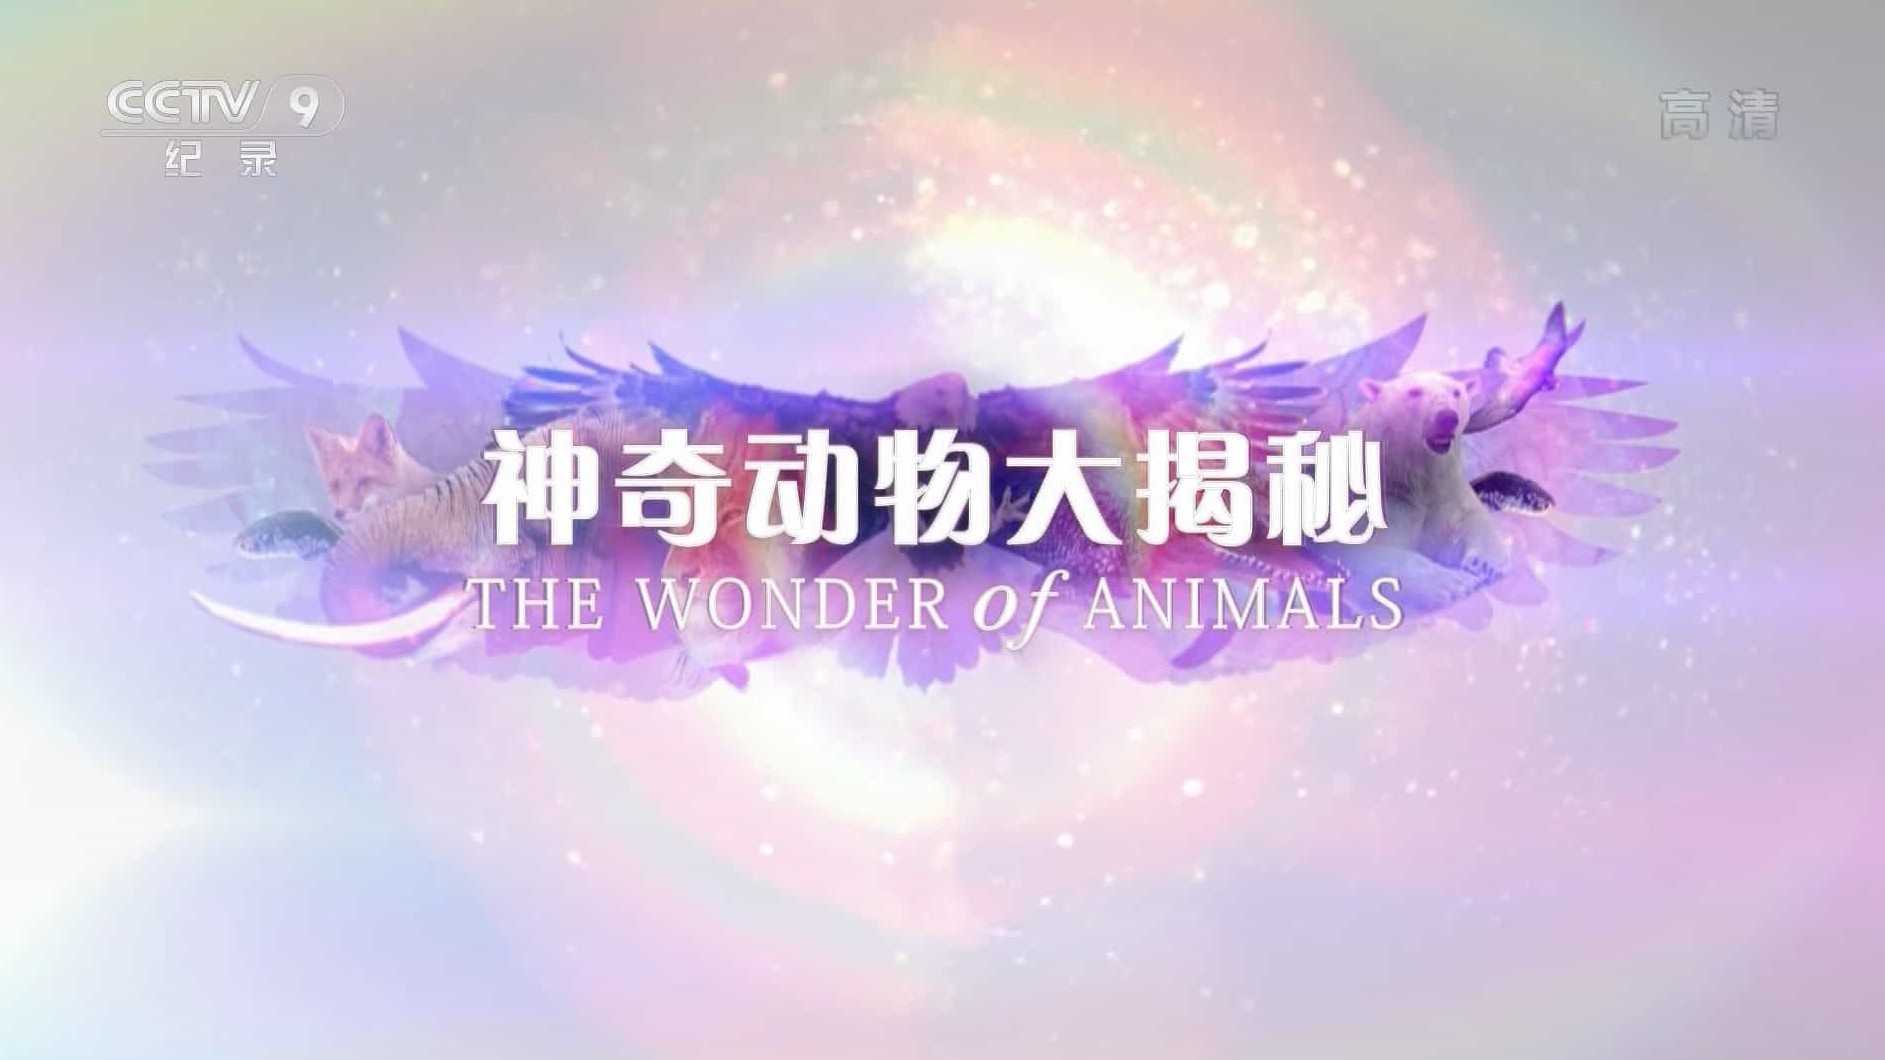 BBC纪录片《神奇动物大揭秘 The Wonder of Animals 2017》全5集 国语中字 1080P高清网盘下载